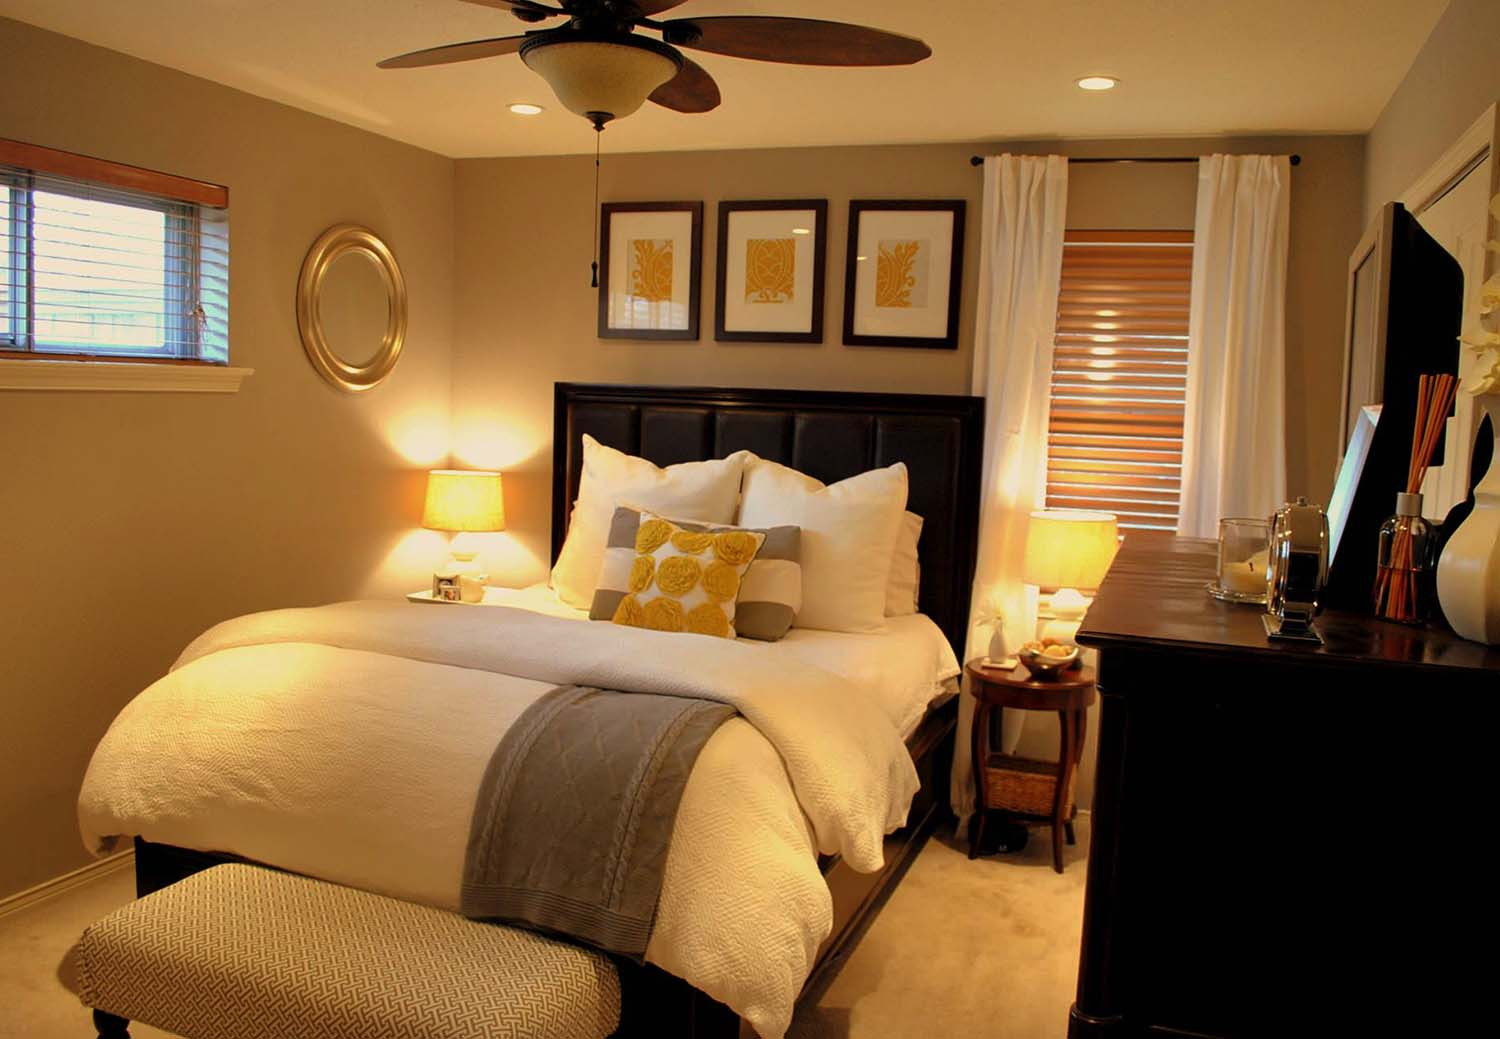 Master Bedroom Ideas
 30 Small yet amazingly cozy master bedroom retreats